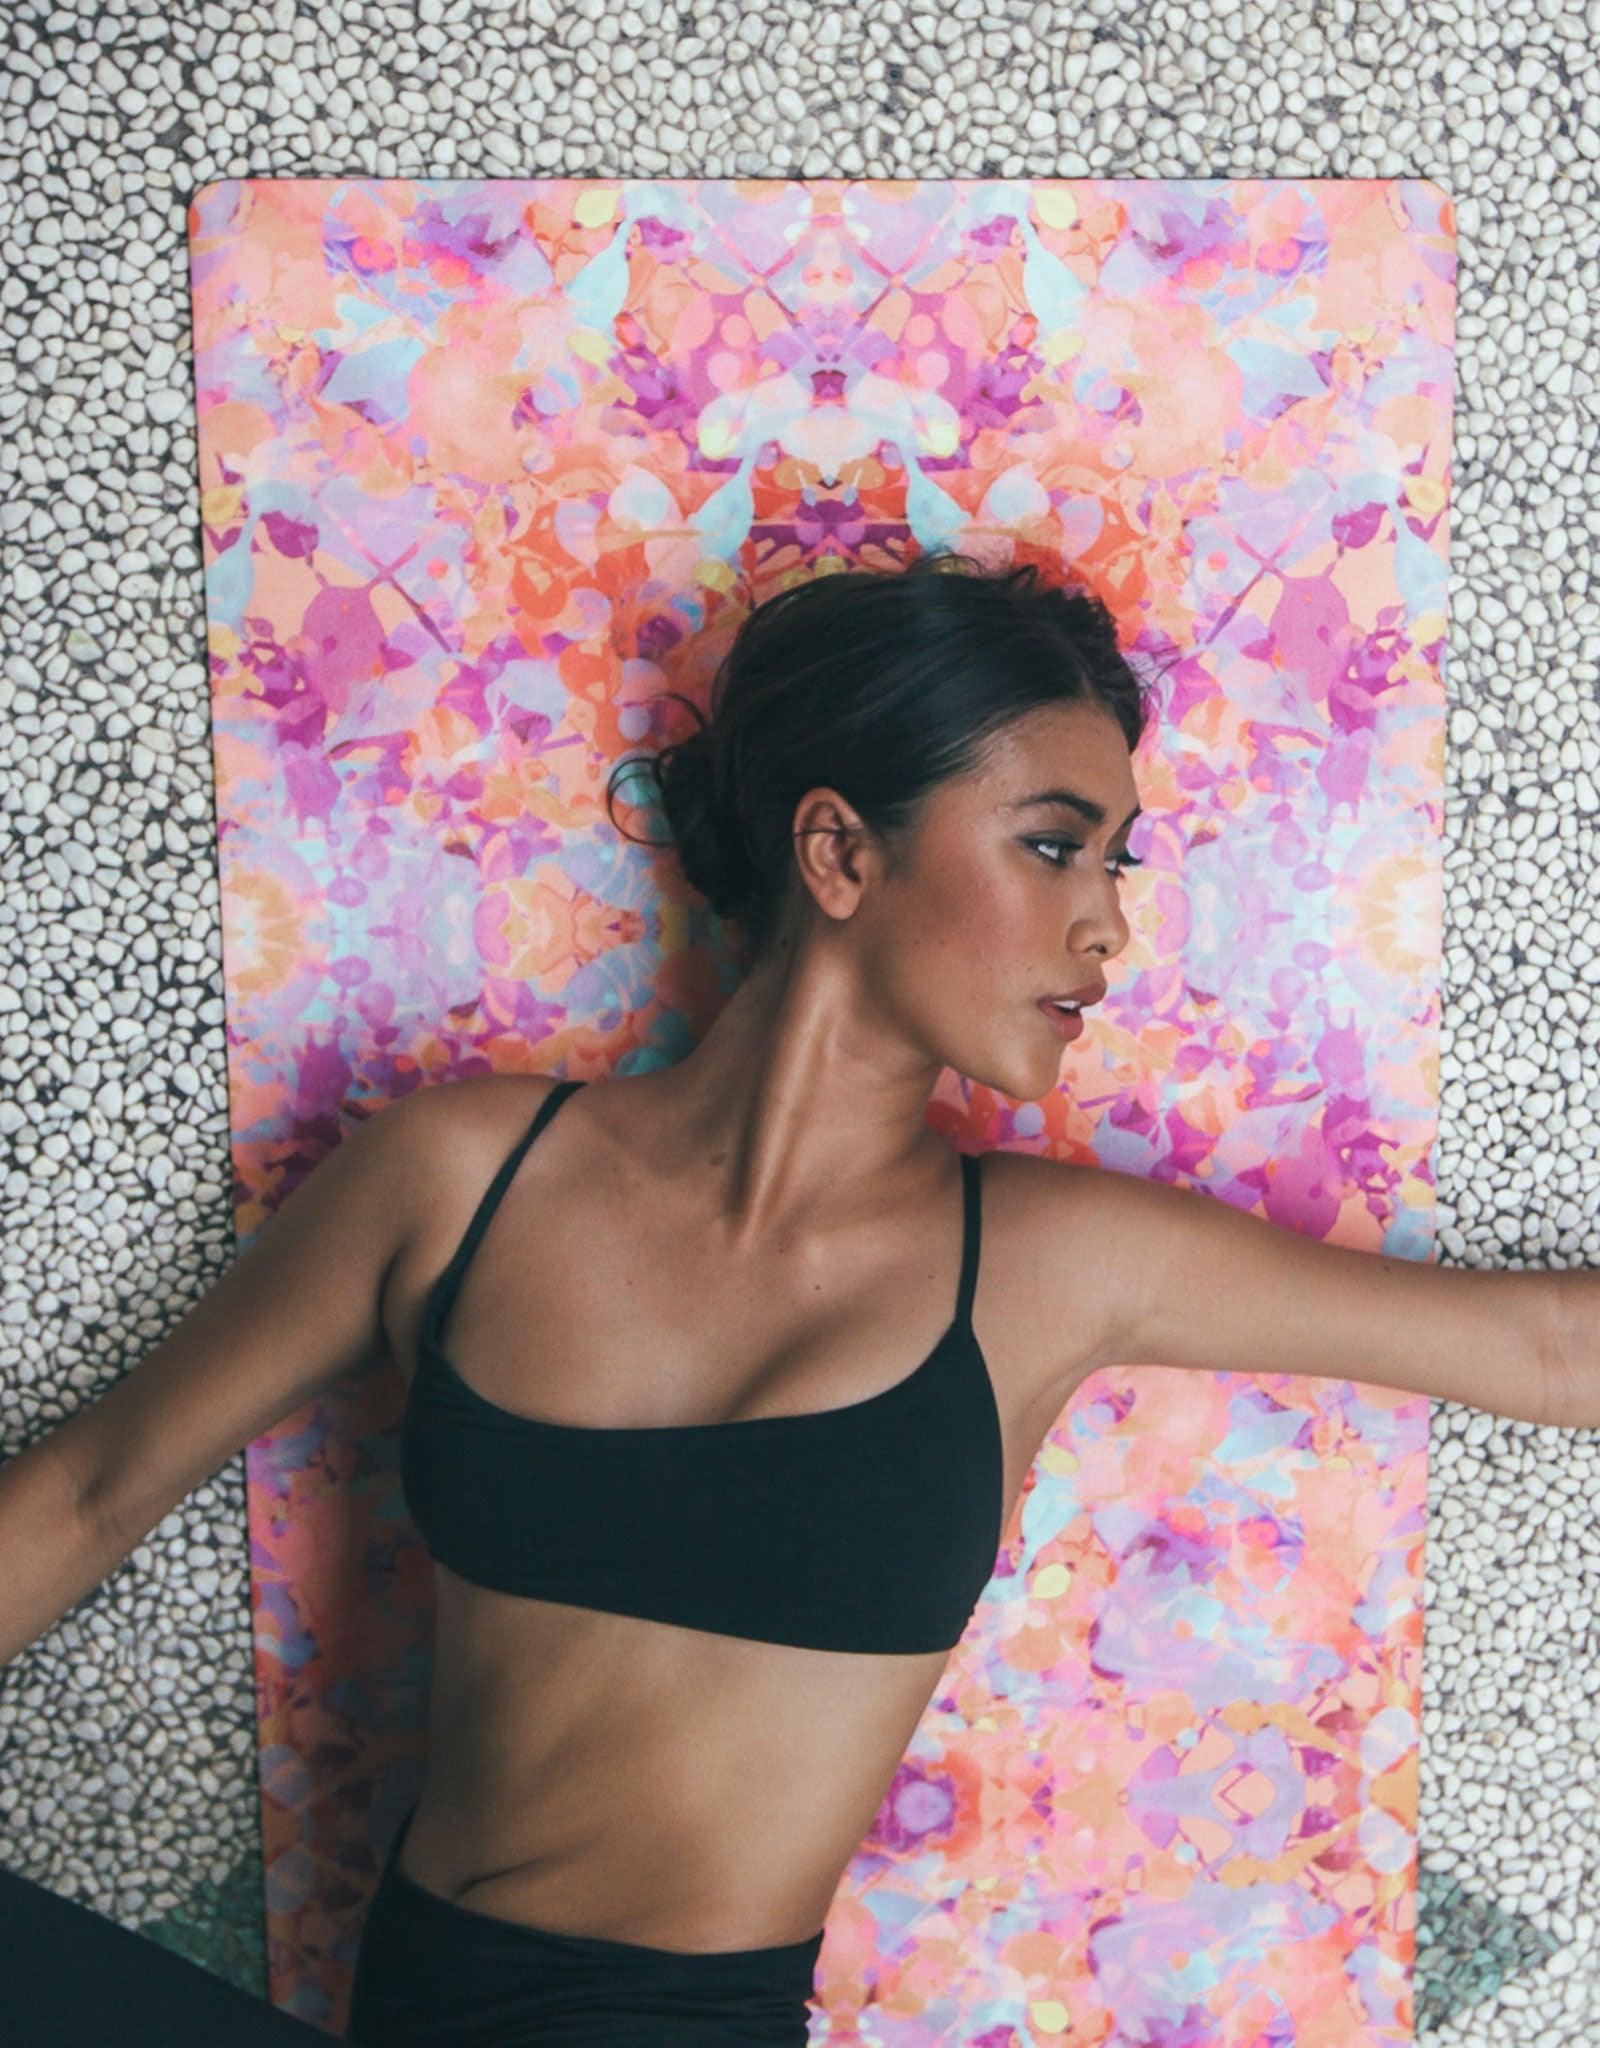 Combo Yoga Mat: 2-in-1 (Mat + Towel) - Kaleidoscope - Non - Slip Yoga Mat - Yoga Design Lab 